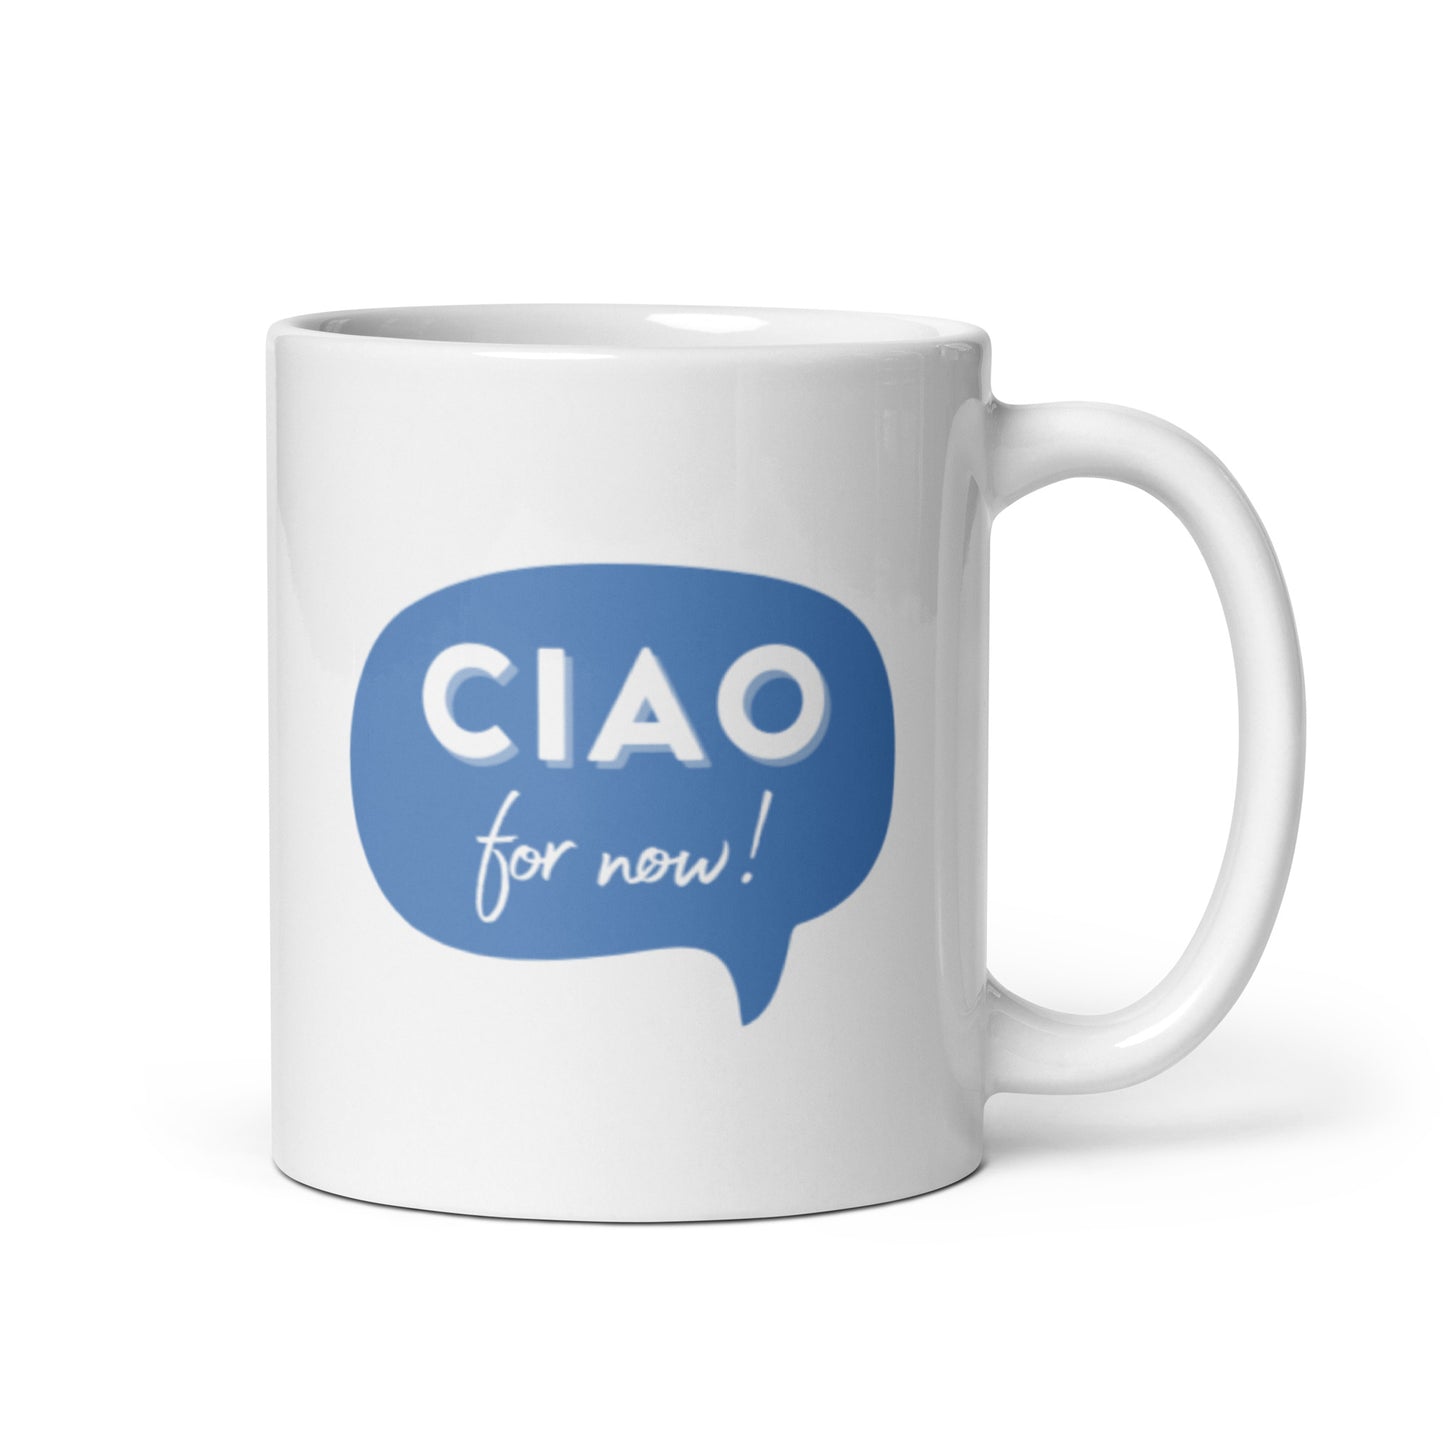 "Ciao for now!" white glossy mug